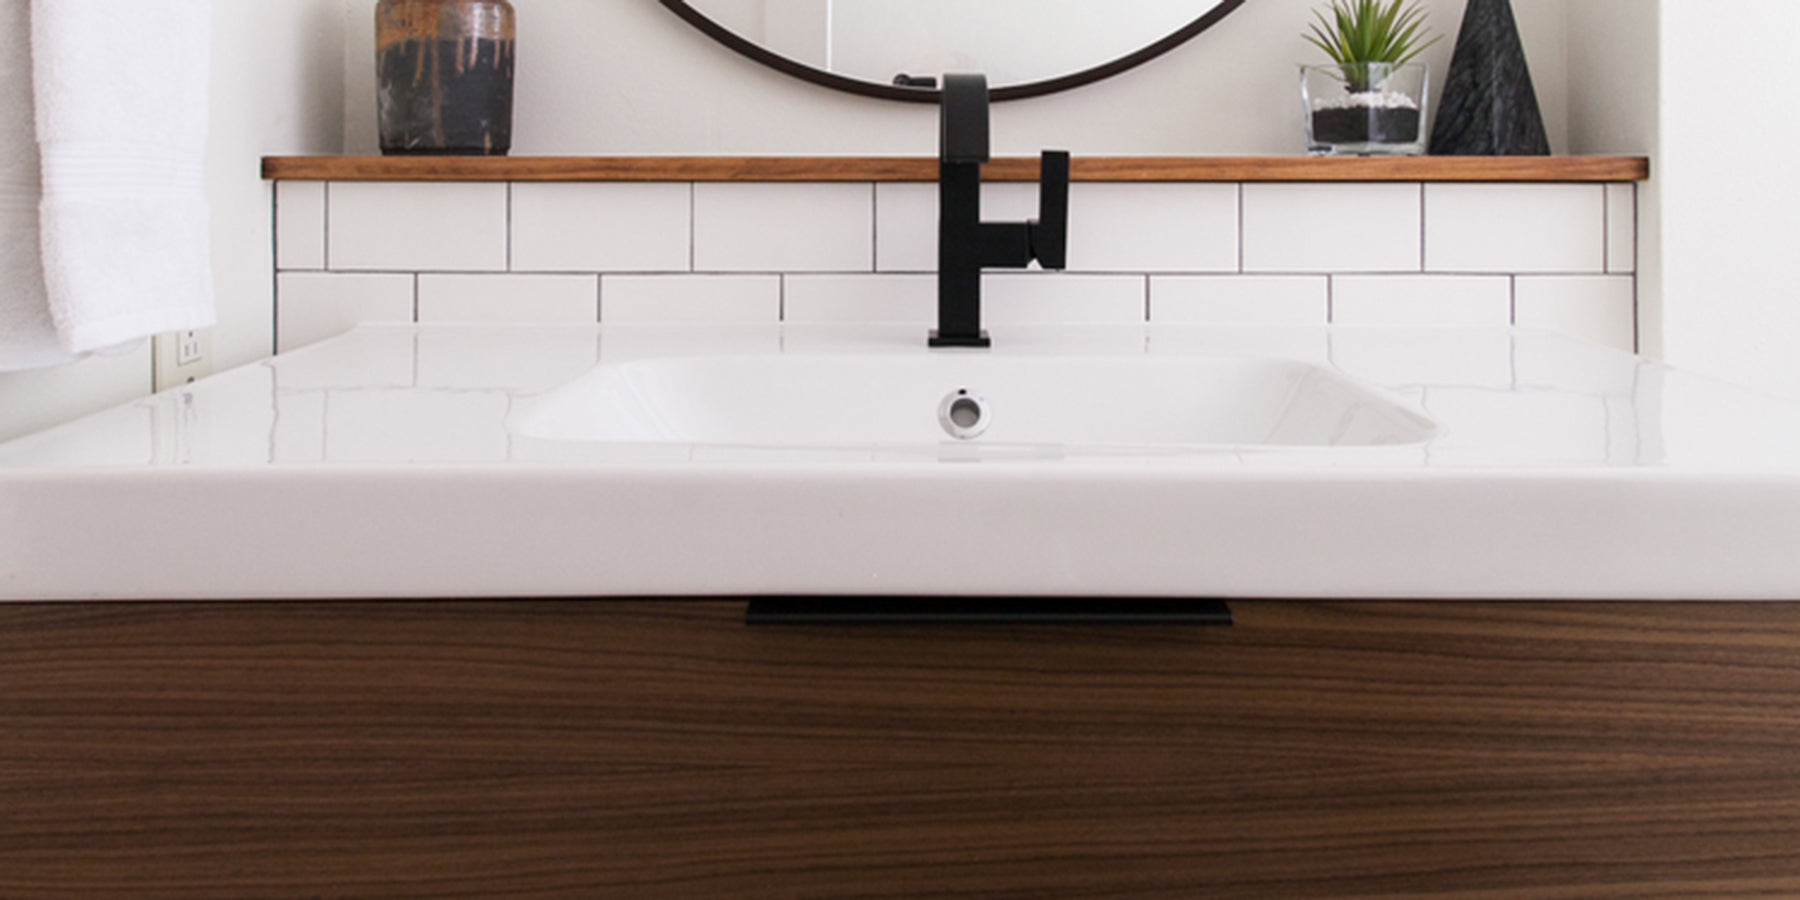 Eye-catching Bathroom with a Bold Design